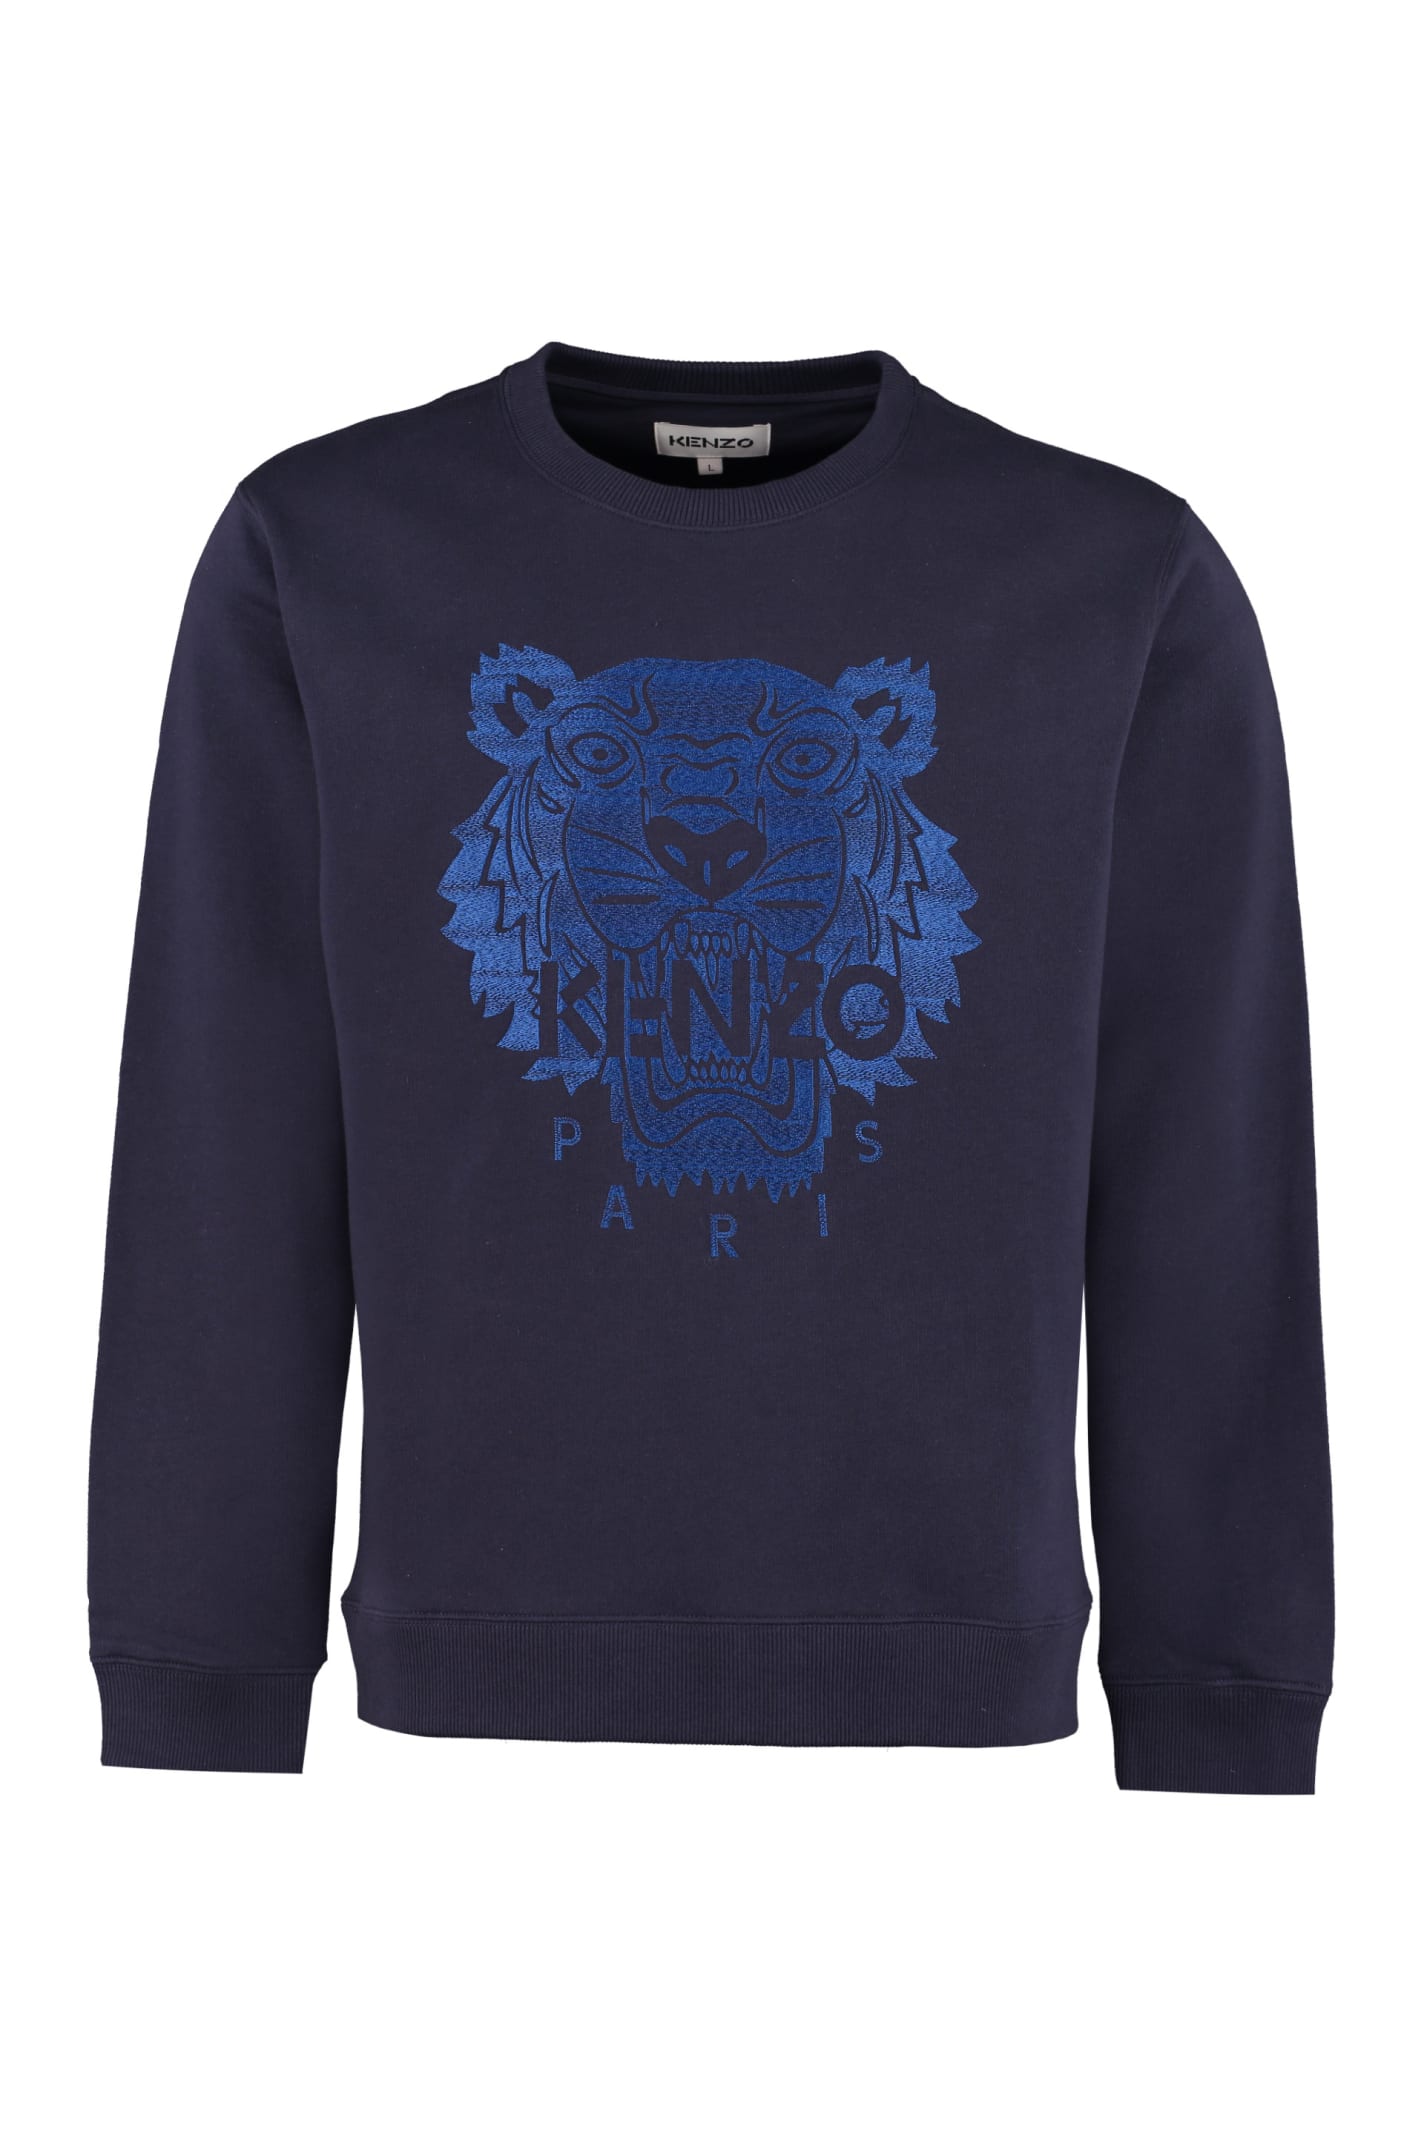 Kenzo Embroidered Cotton Crew-neck Sweatshirt